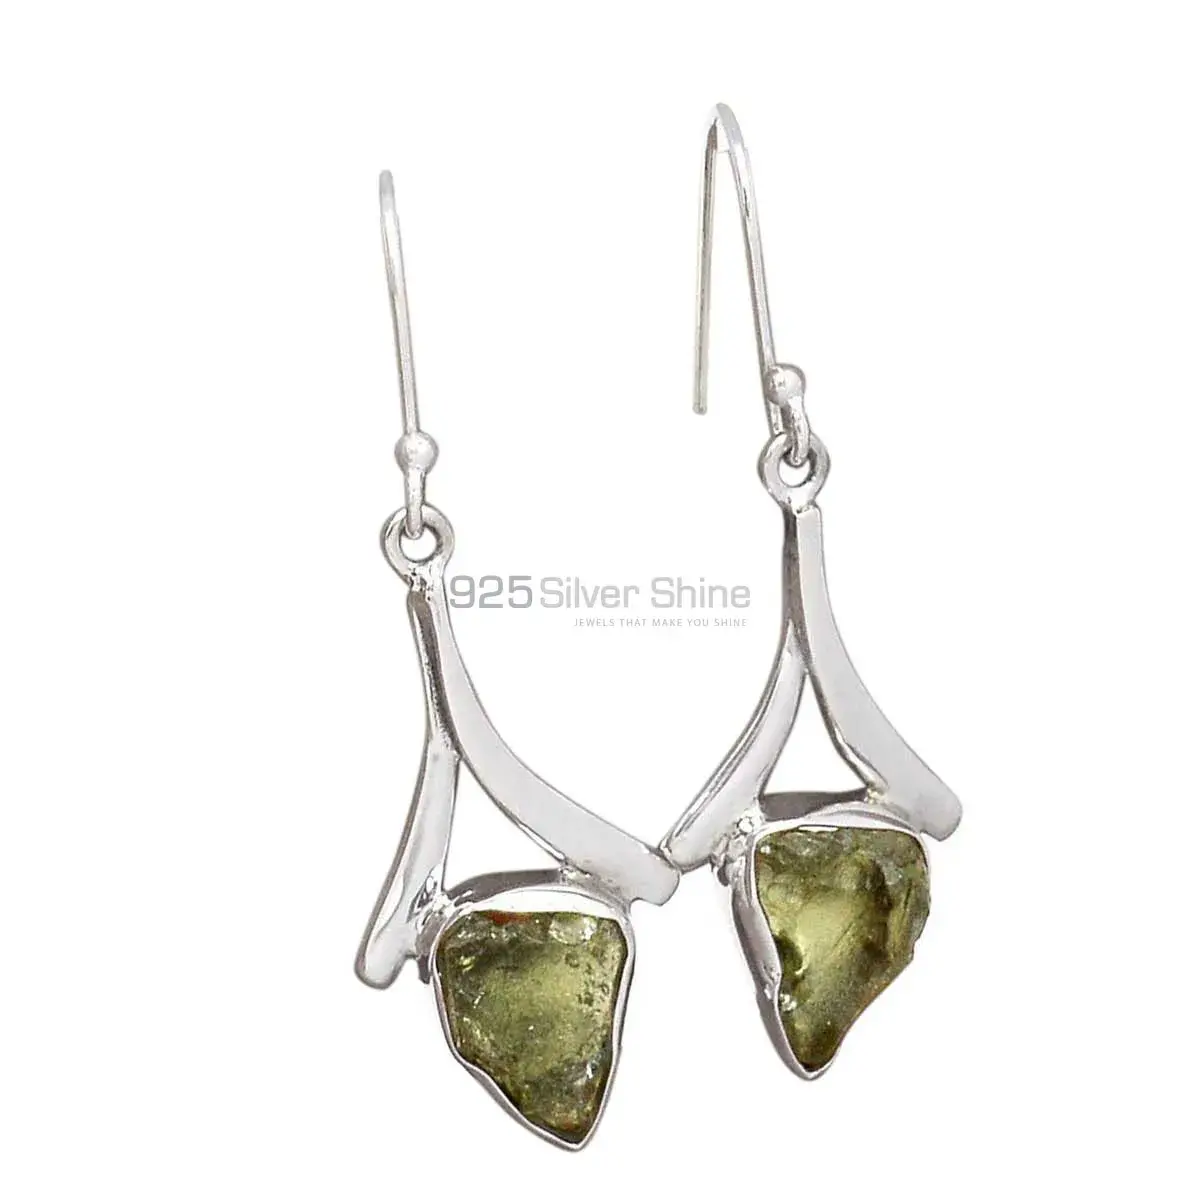 Affordable 925 Sterling Silver Handmade Earrings Suppliers In Prehnite Gemstone Jewelry 925SE2165